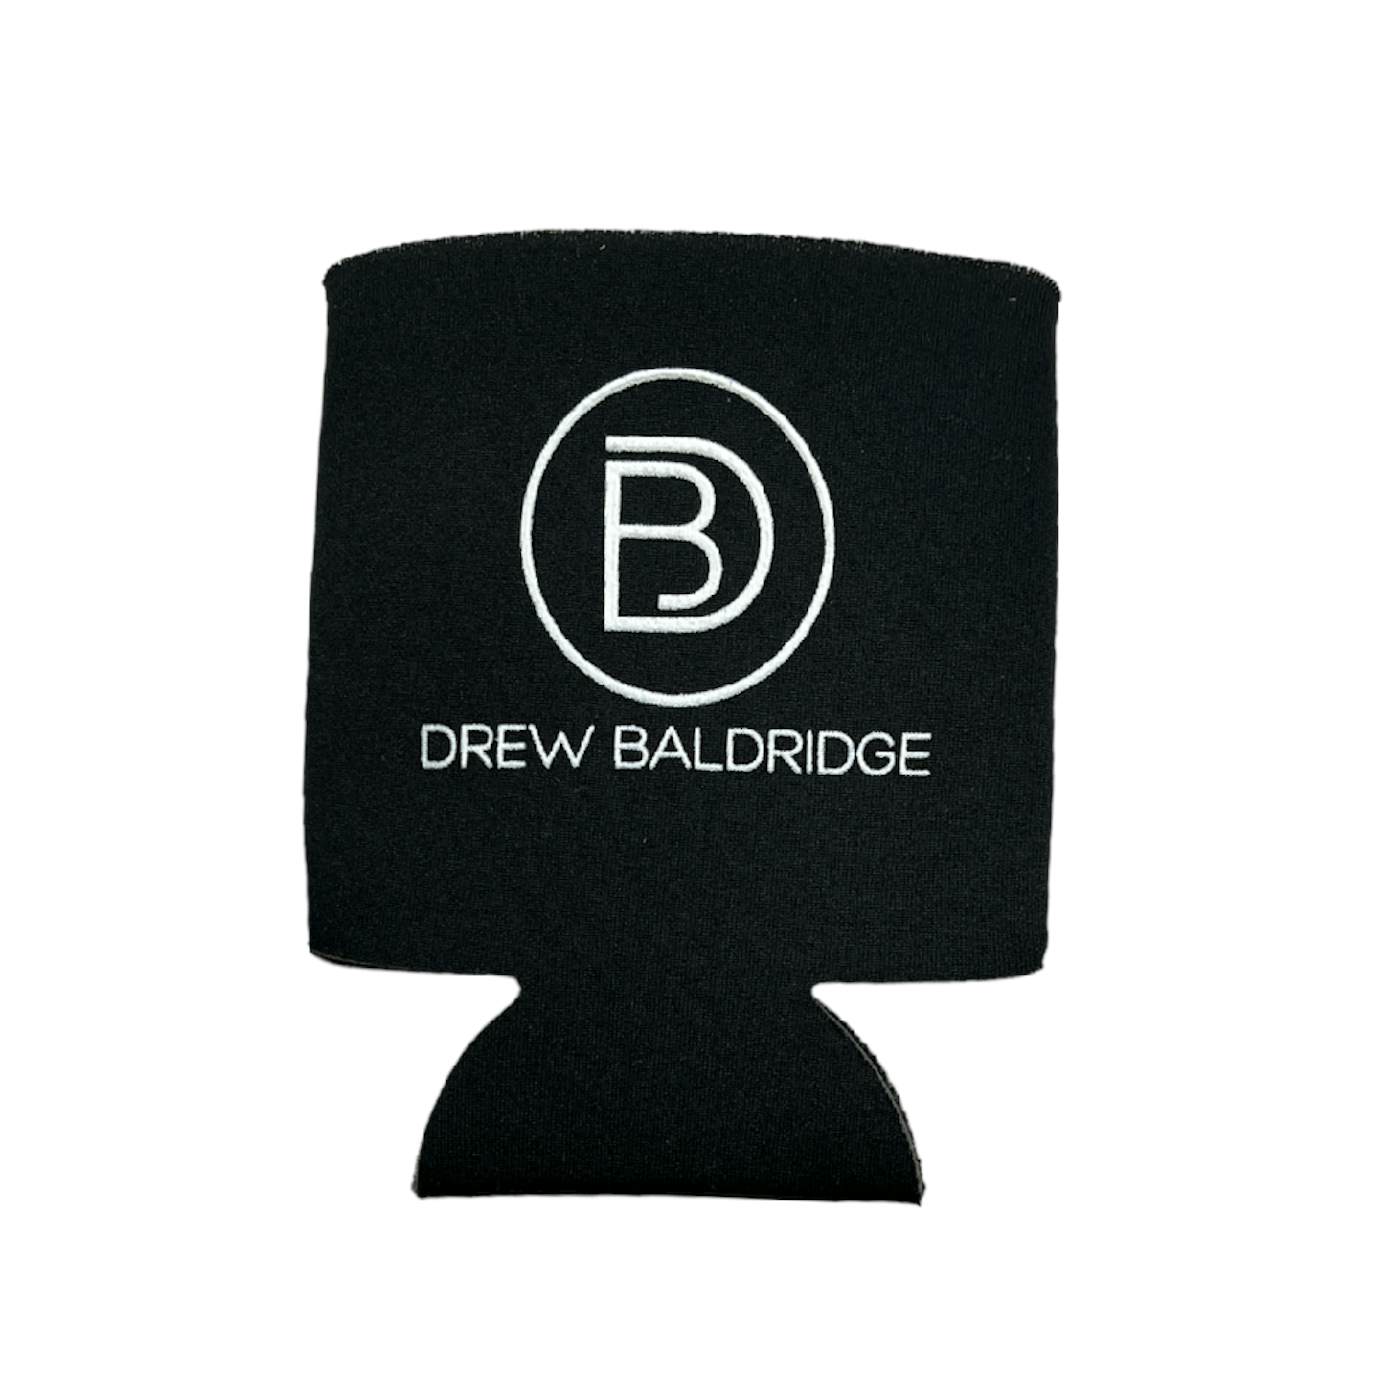 Drew Baldridge Black Can Coolie